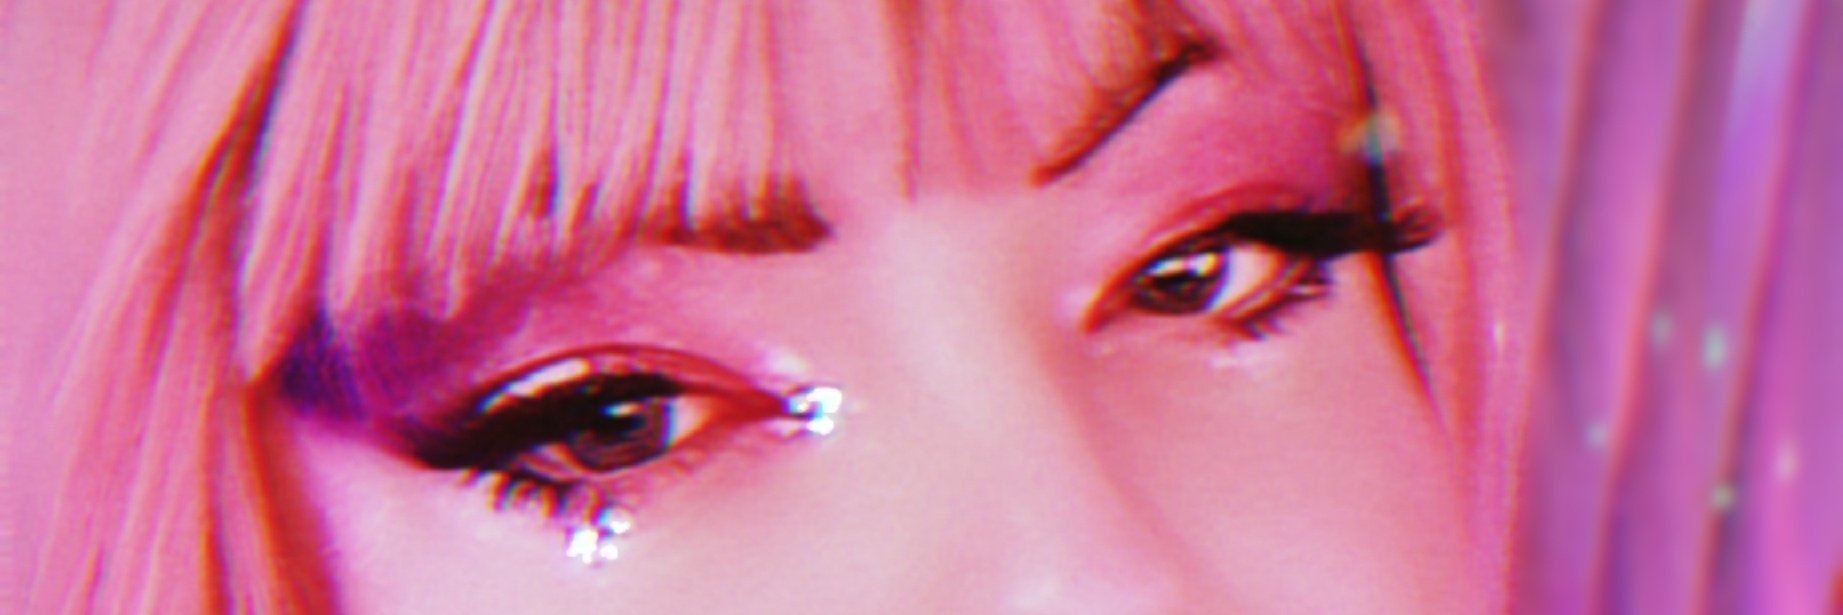 Dominatrix Goddess V eyes in pink colour